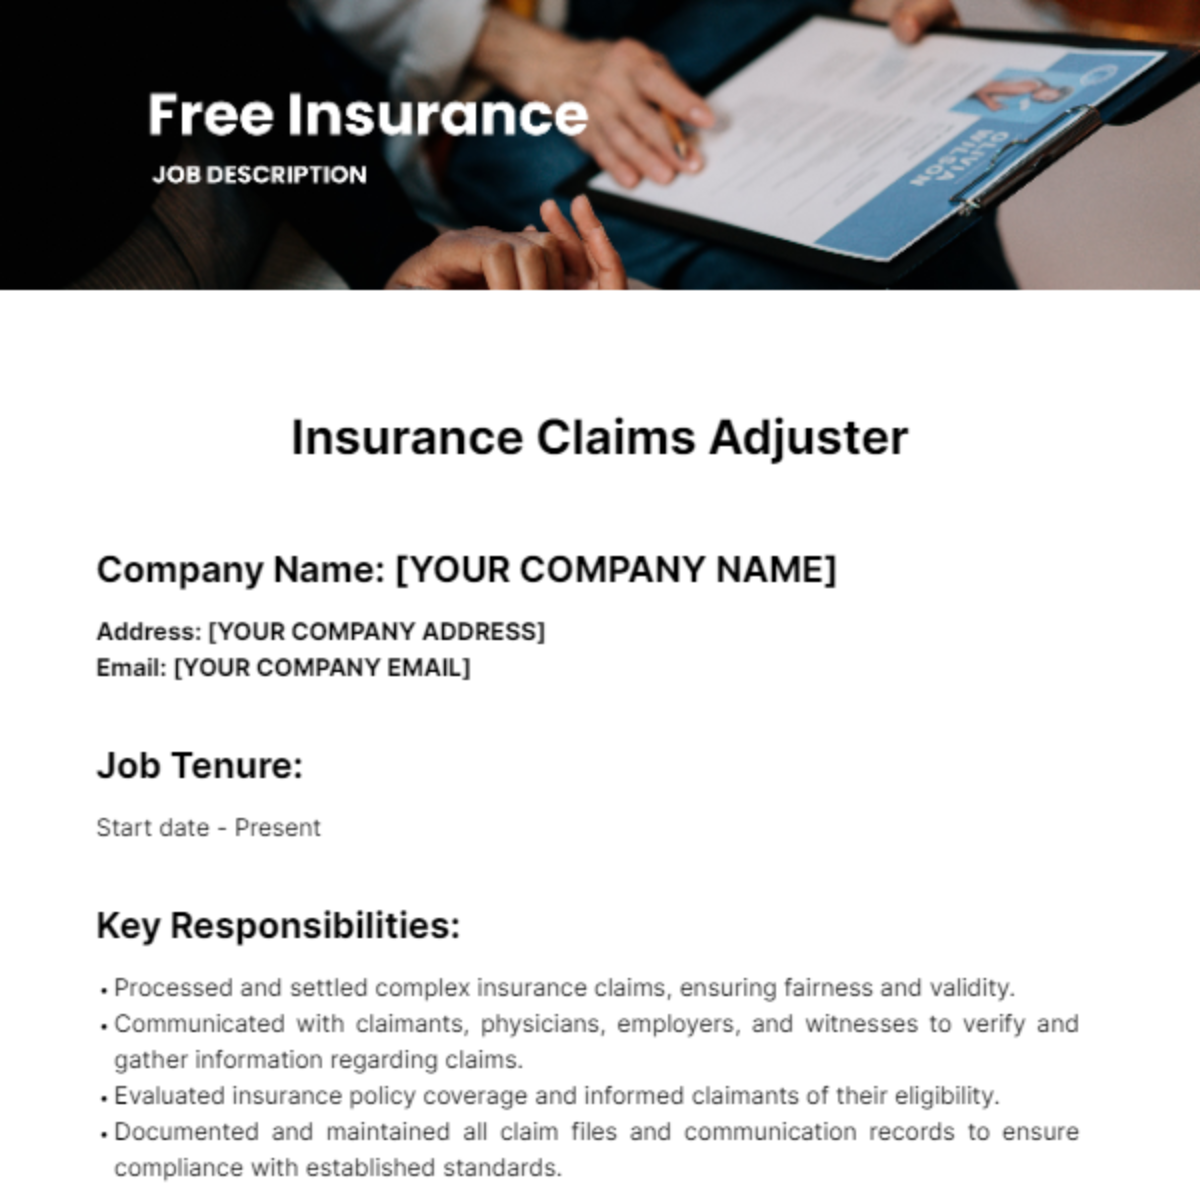 Free Insurance Job Description for Resume Template